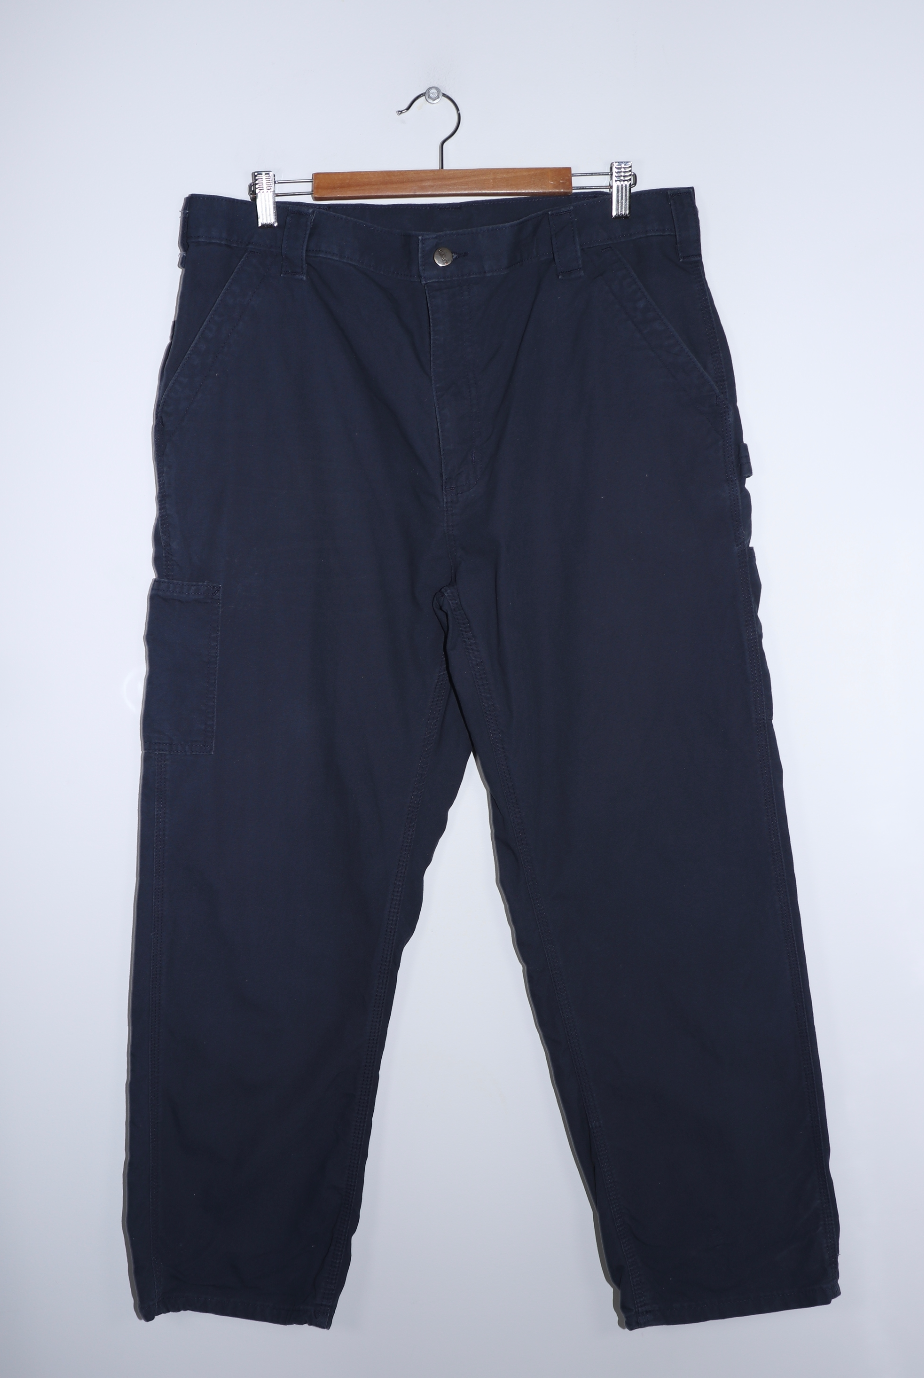 Vintage Carhartt Navy Regular Carpenter Pants Size: 36 X 30